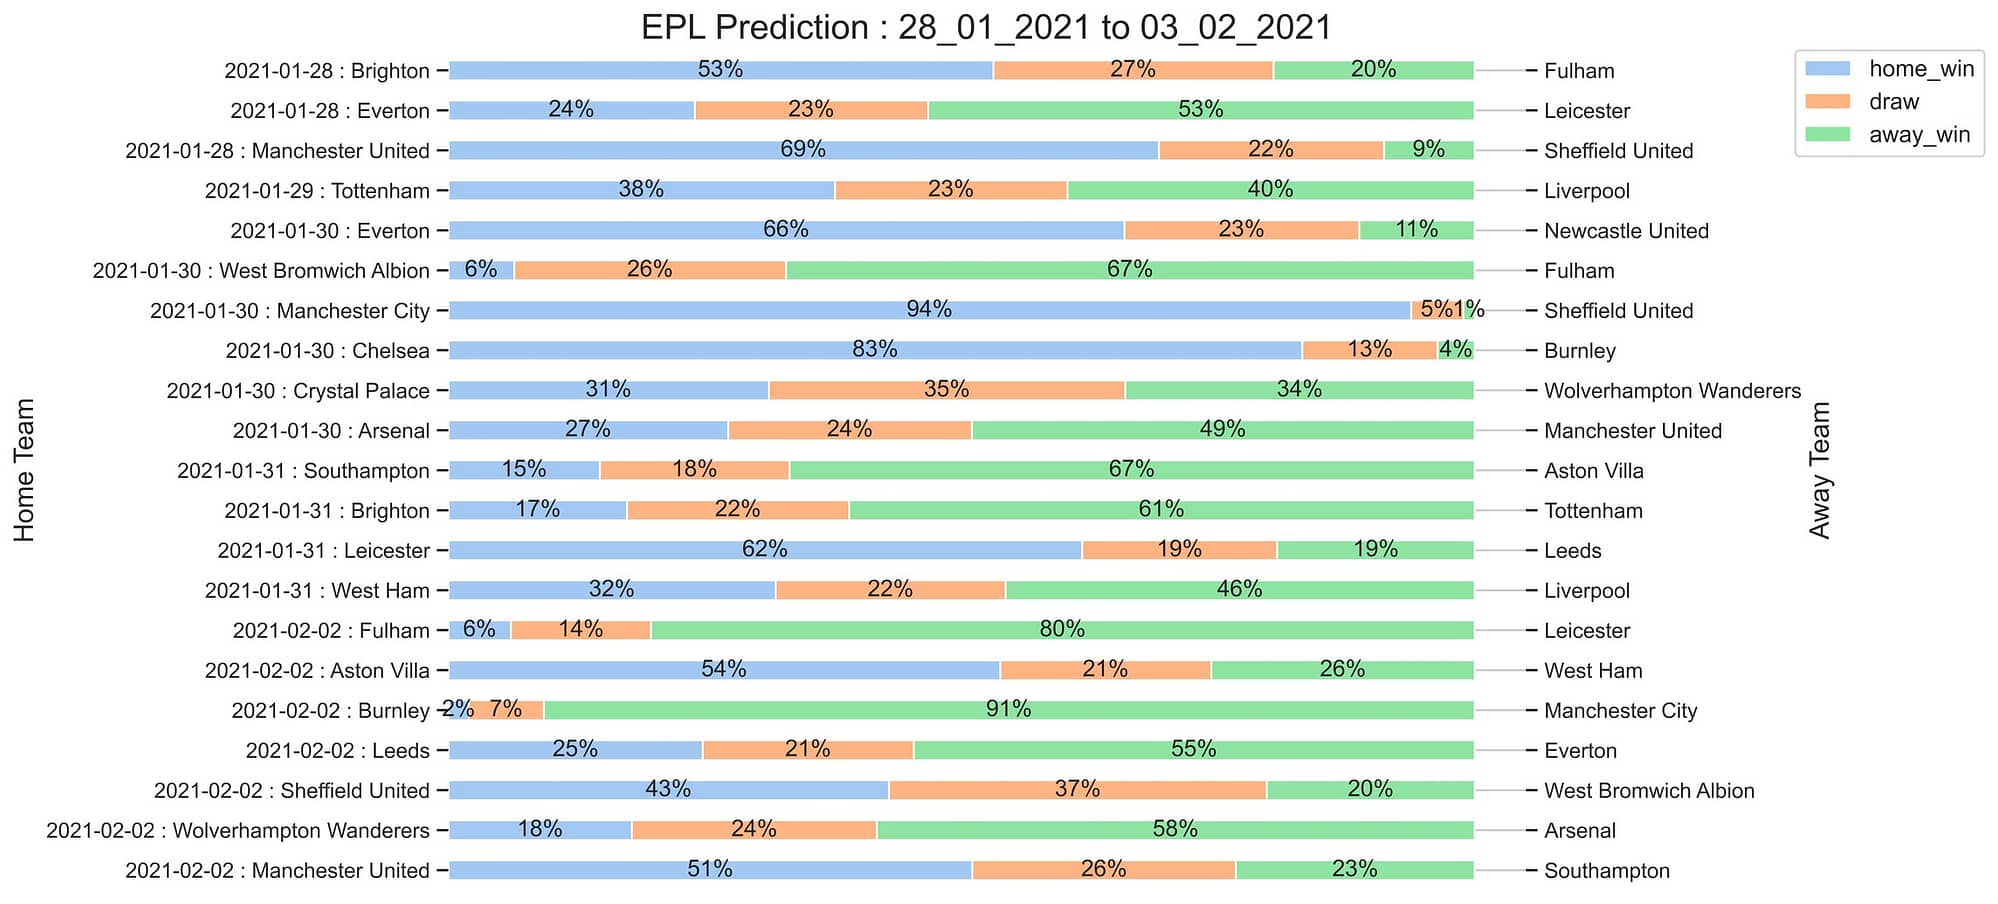 EPL_Prediction 28_01_2021